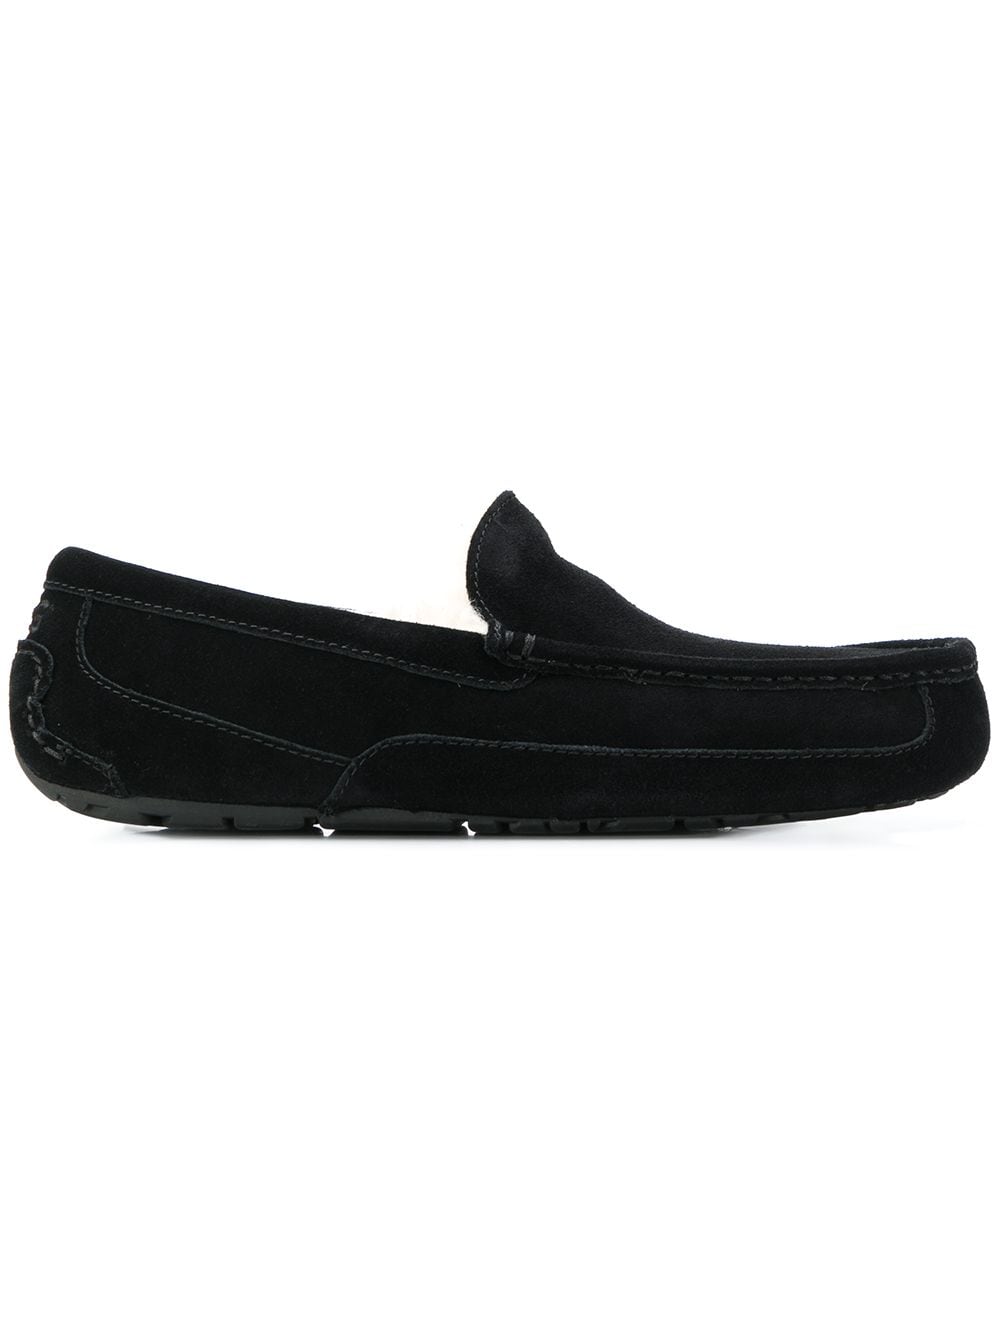 UGG Australia Flat shoes Black